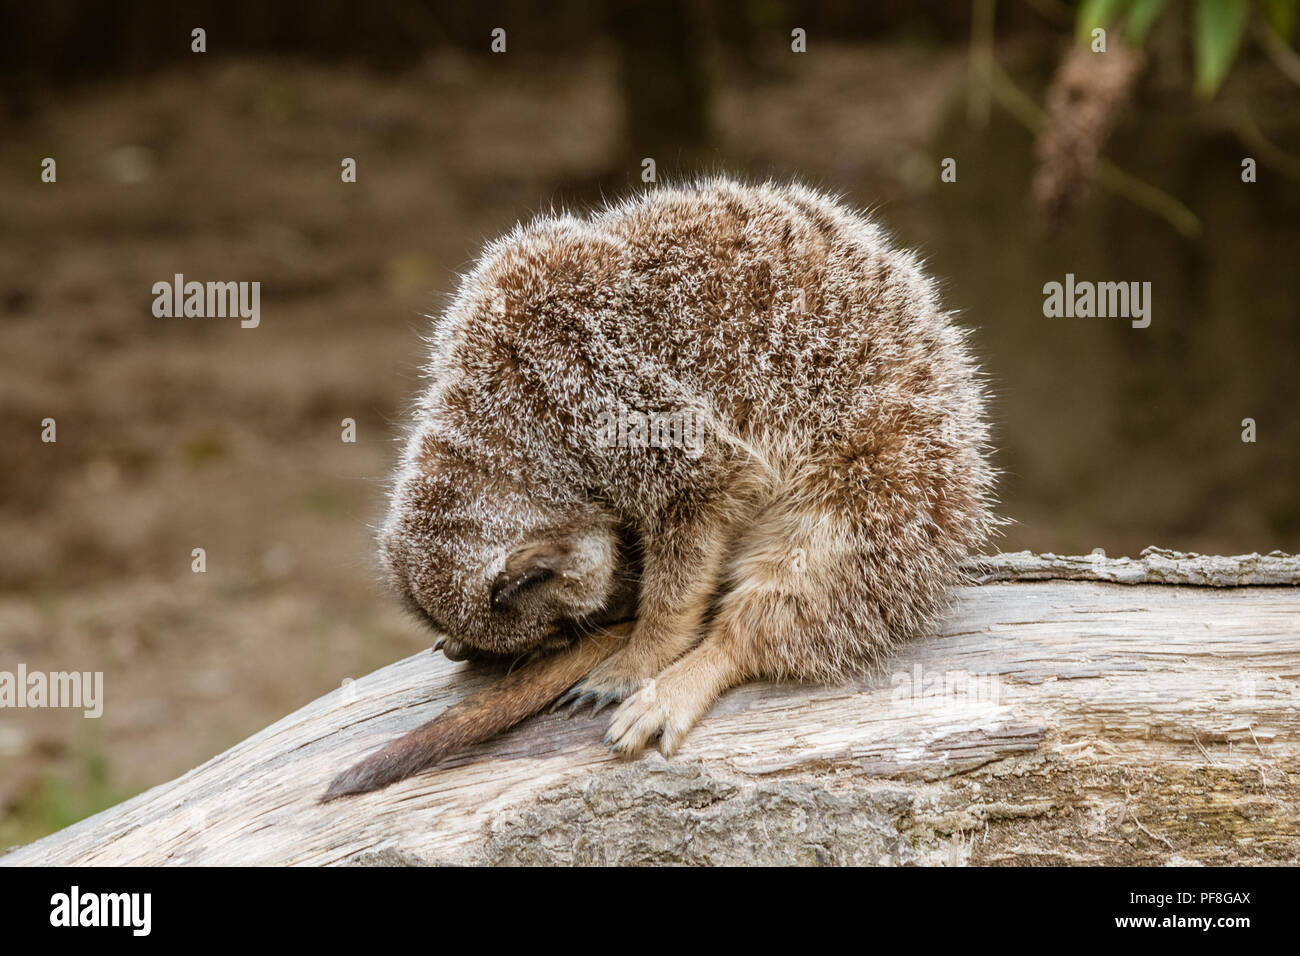 Sleeping Meerkat.  Sat upright with its head bowed, the cute meerkat is asleep Stock Photo